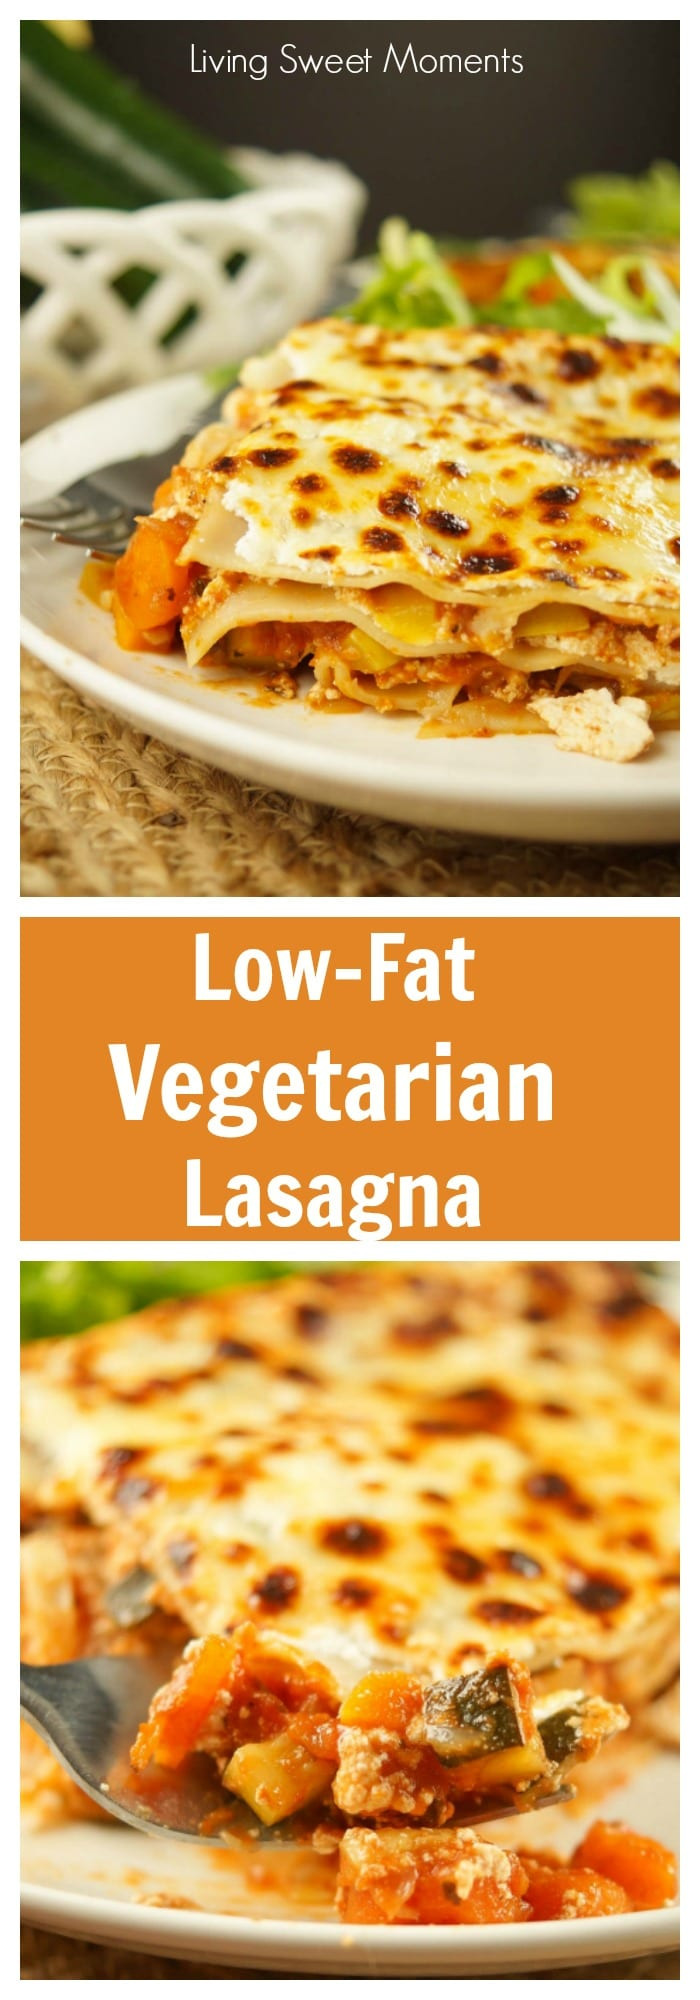 Low Calorie Vegetarian Dinner Recipes
 Low Fat Ve arian Lasagna Recipe Living Sweet Moments